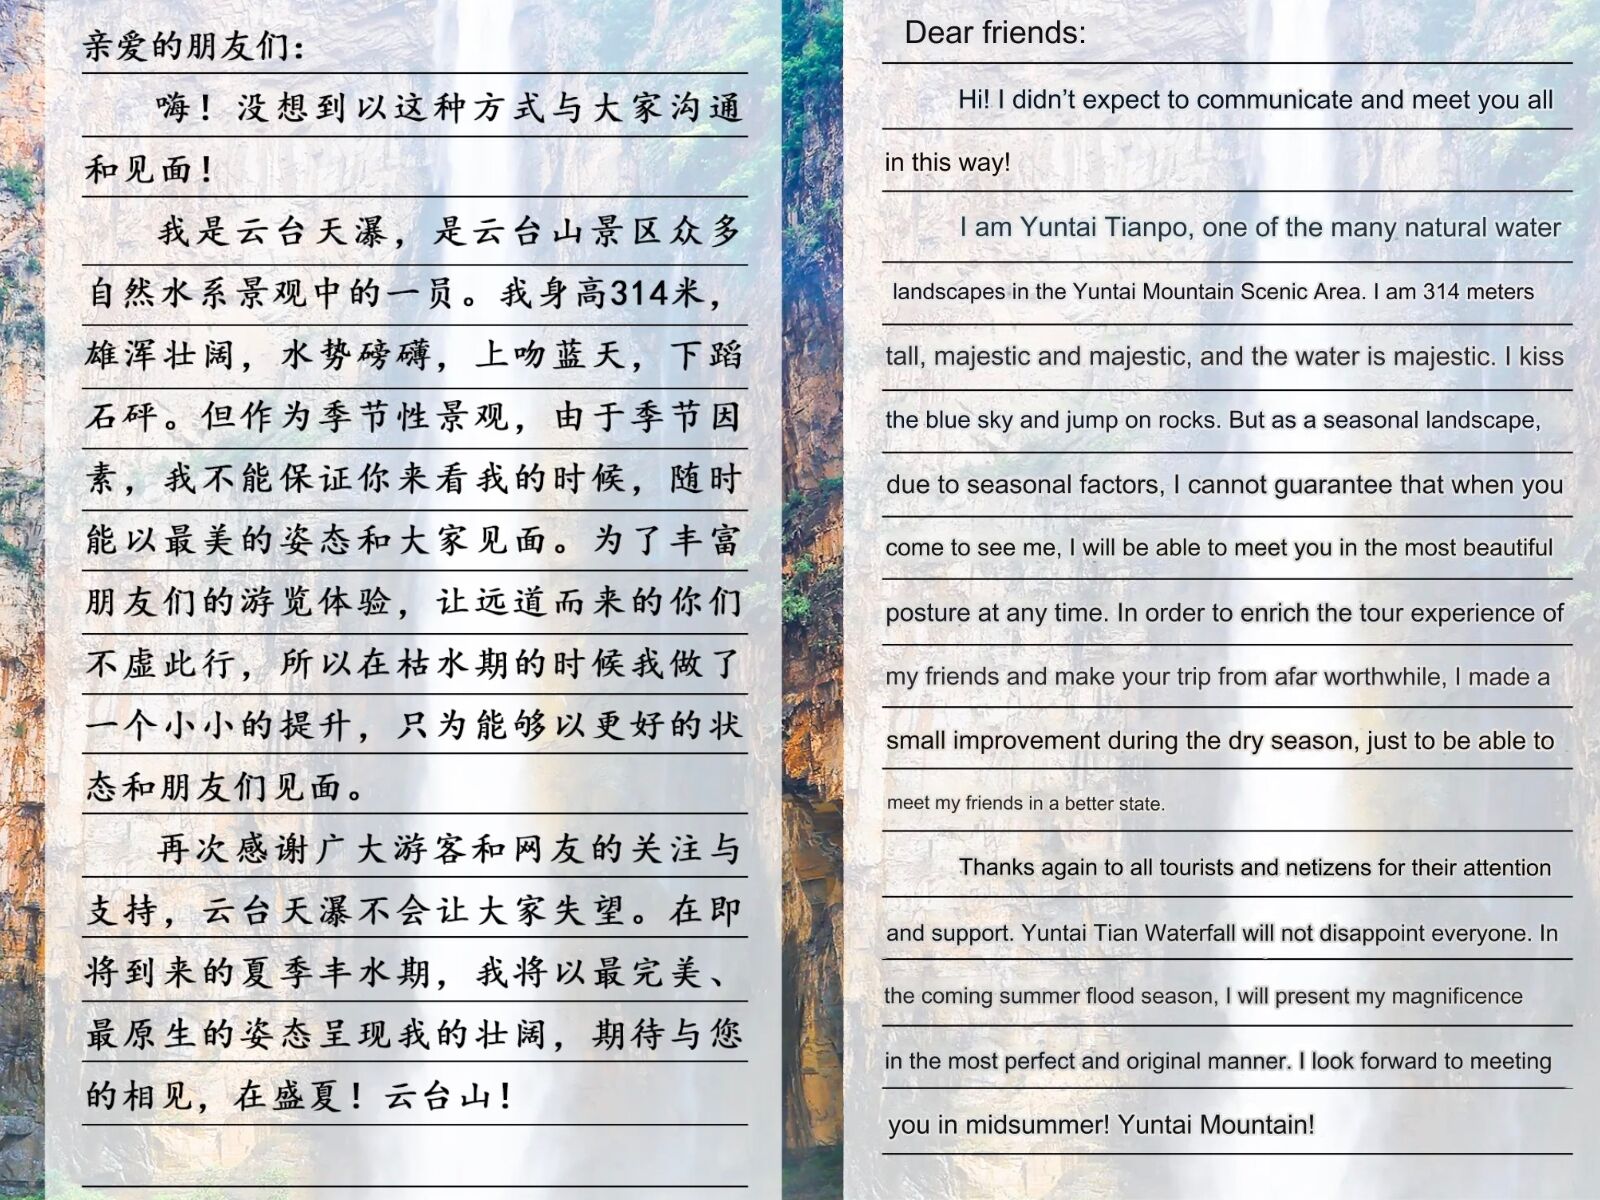 yuntai falls translated note